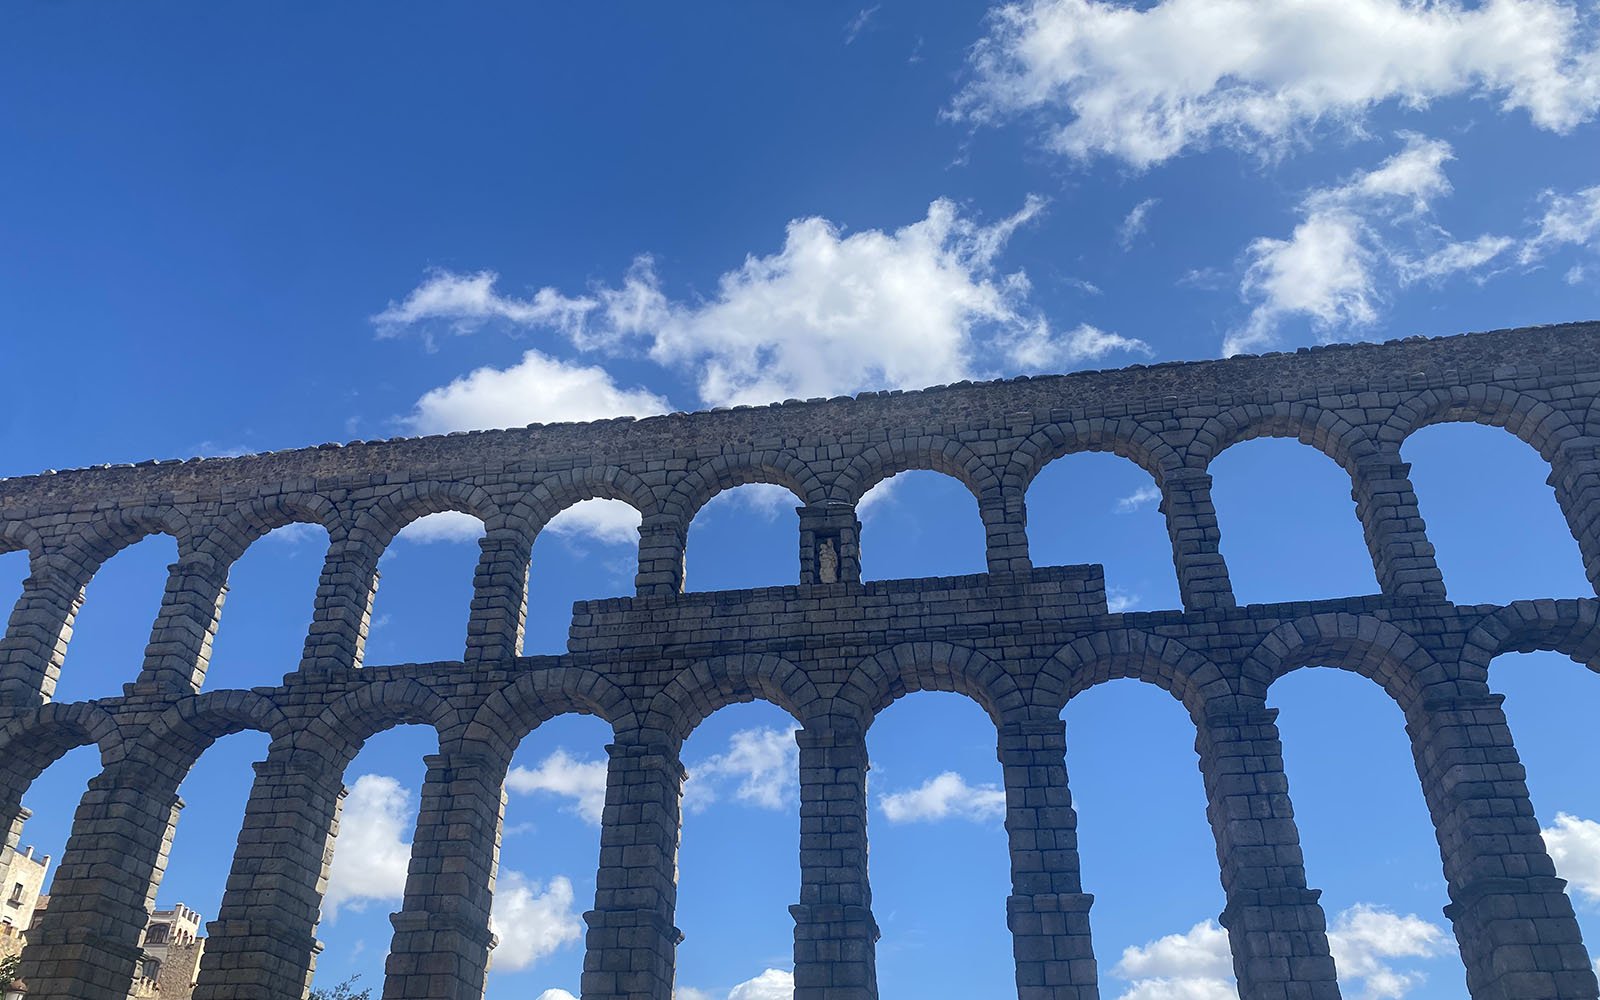 part of the Segovia aquaduct